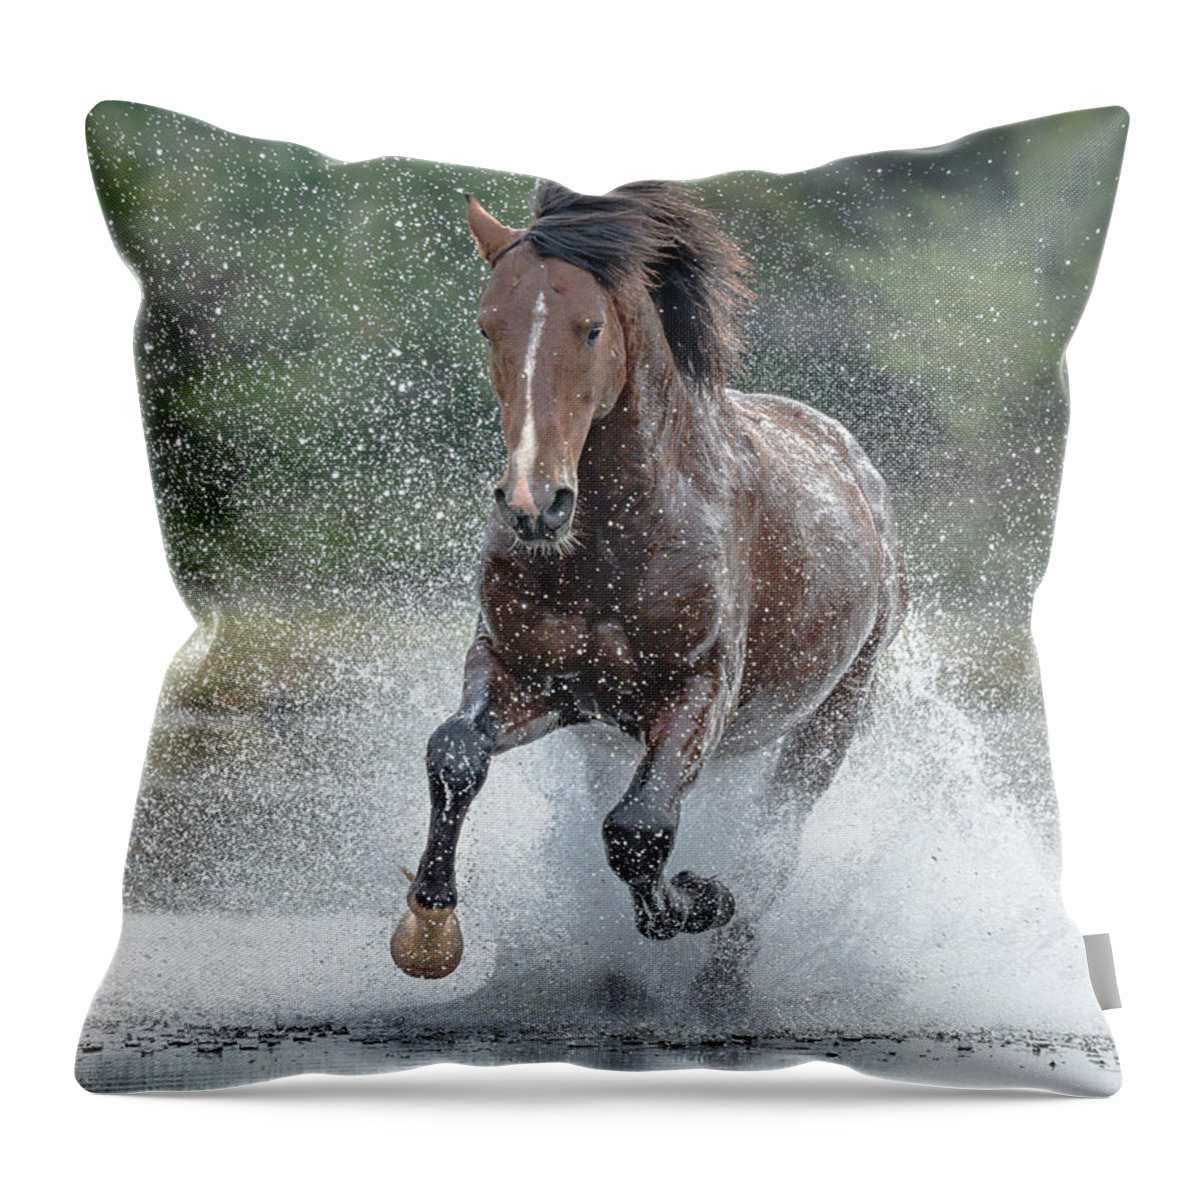 Stallion Throw Pillow featuring the photograph River Run. by Paul Martin